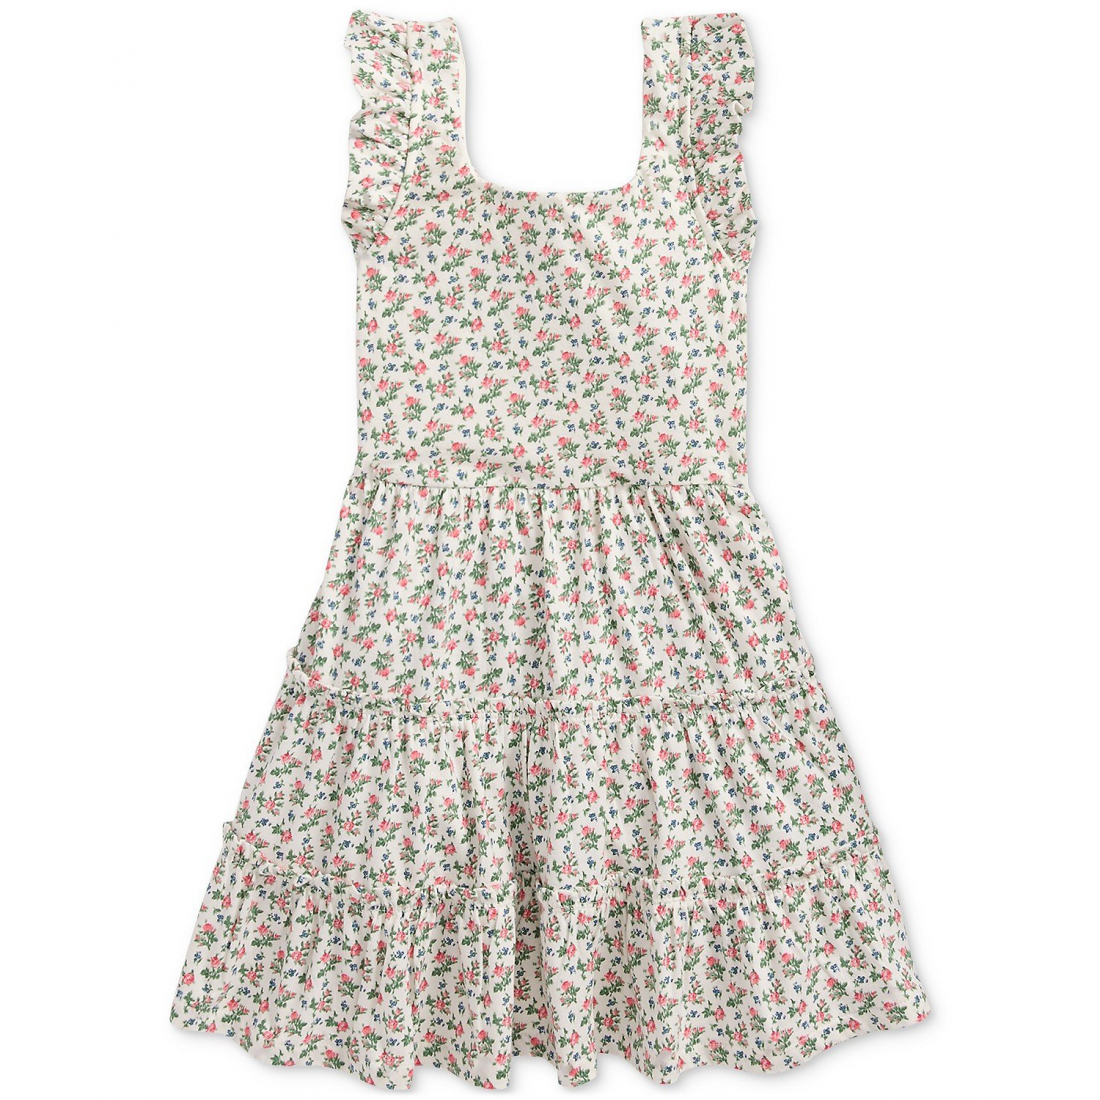 Toddler & Little Girl's 'Floral Ruffled Cotton Jersey' Dress